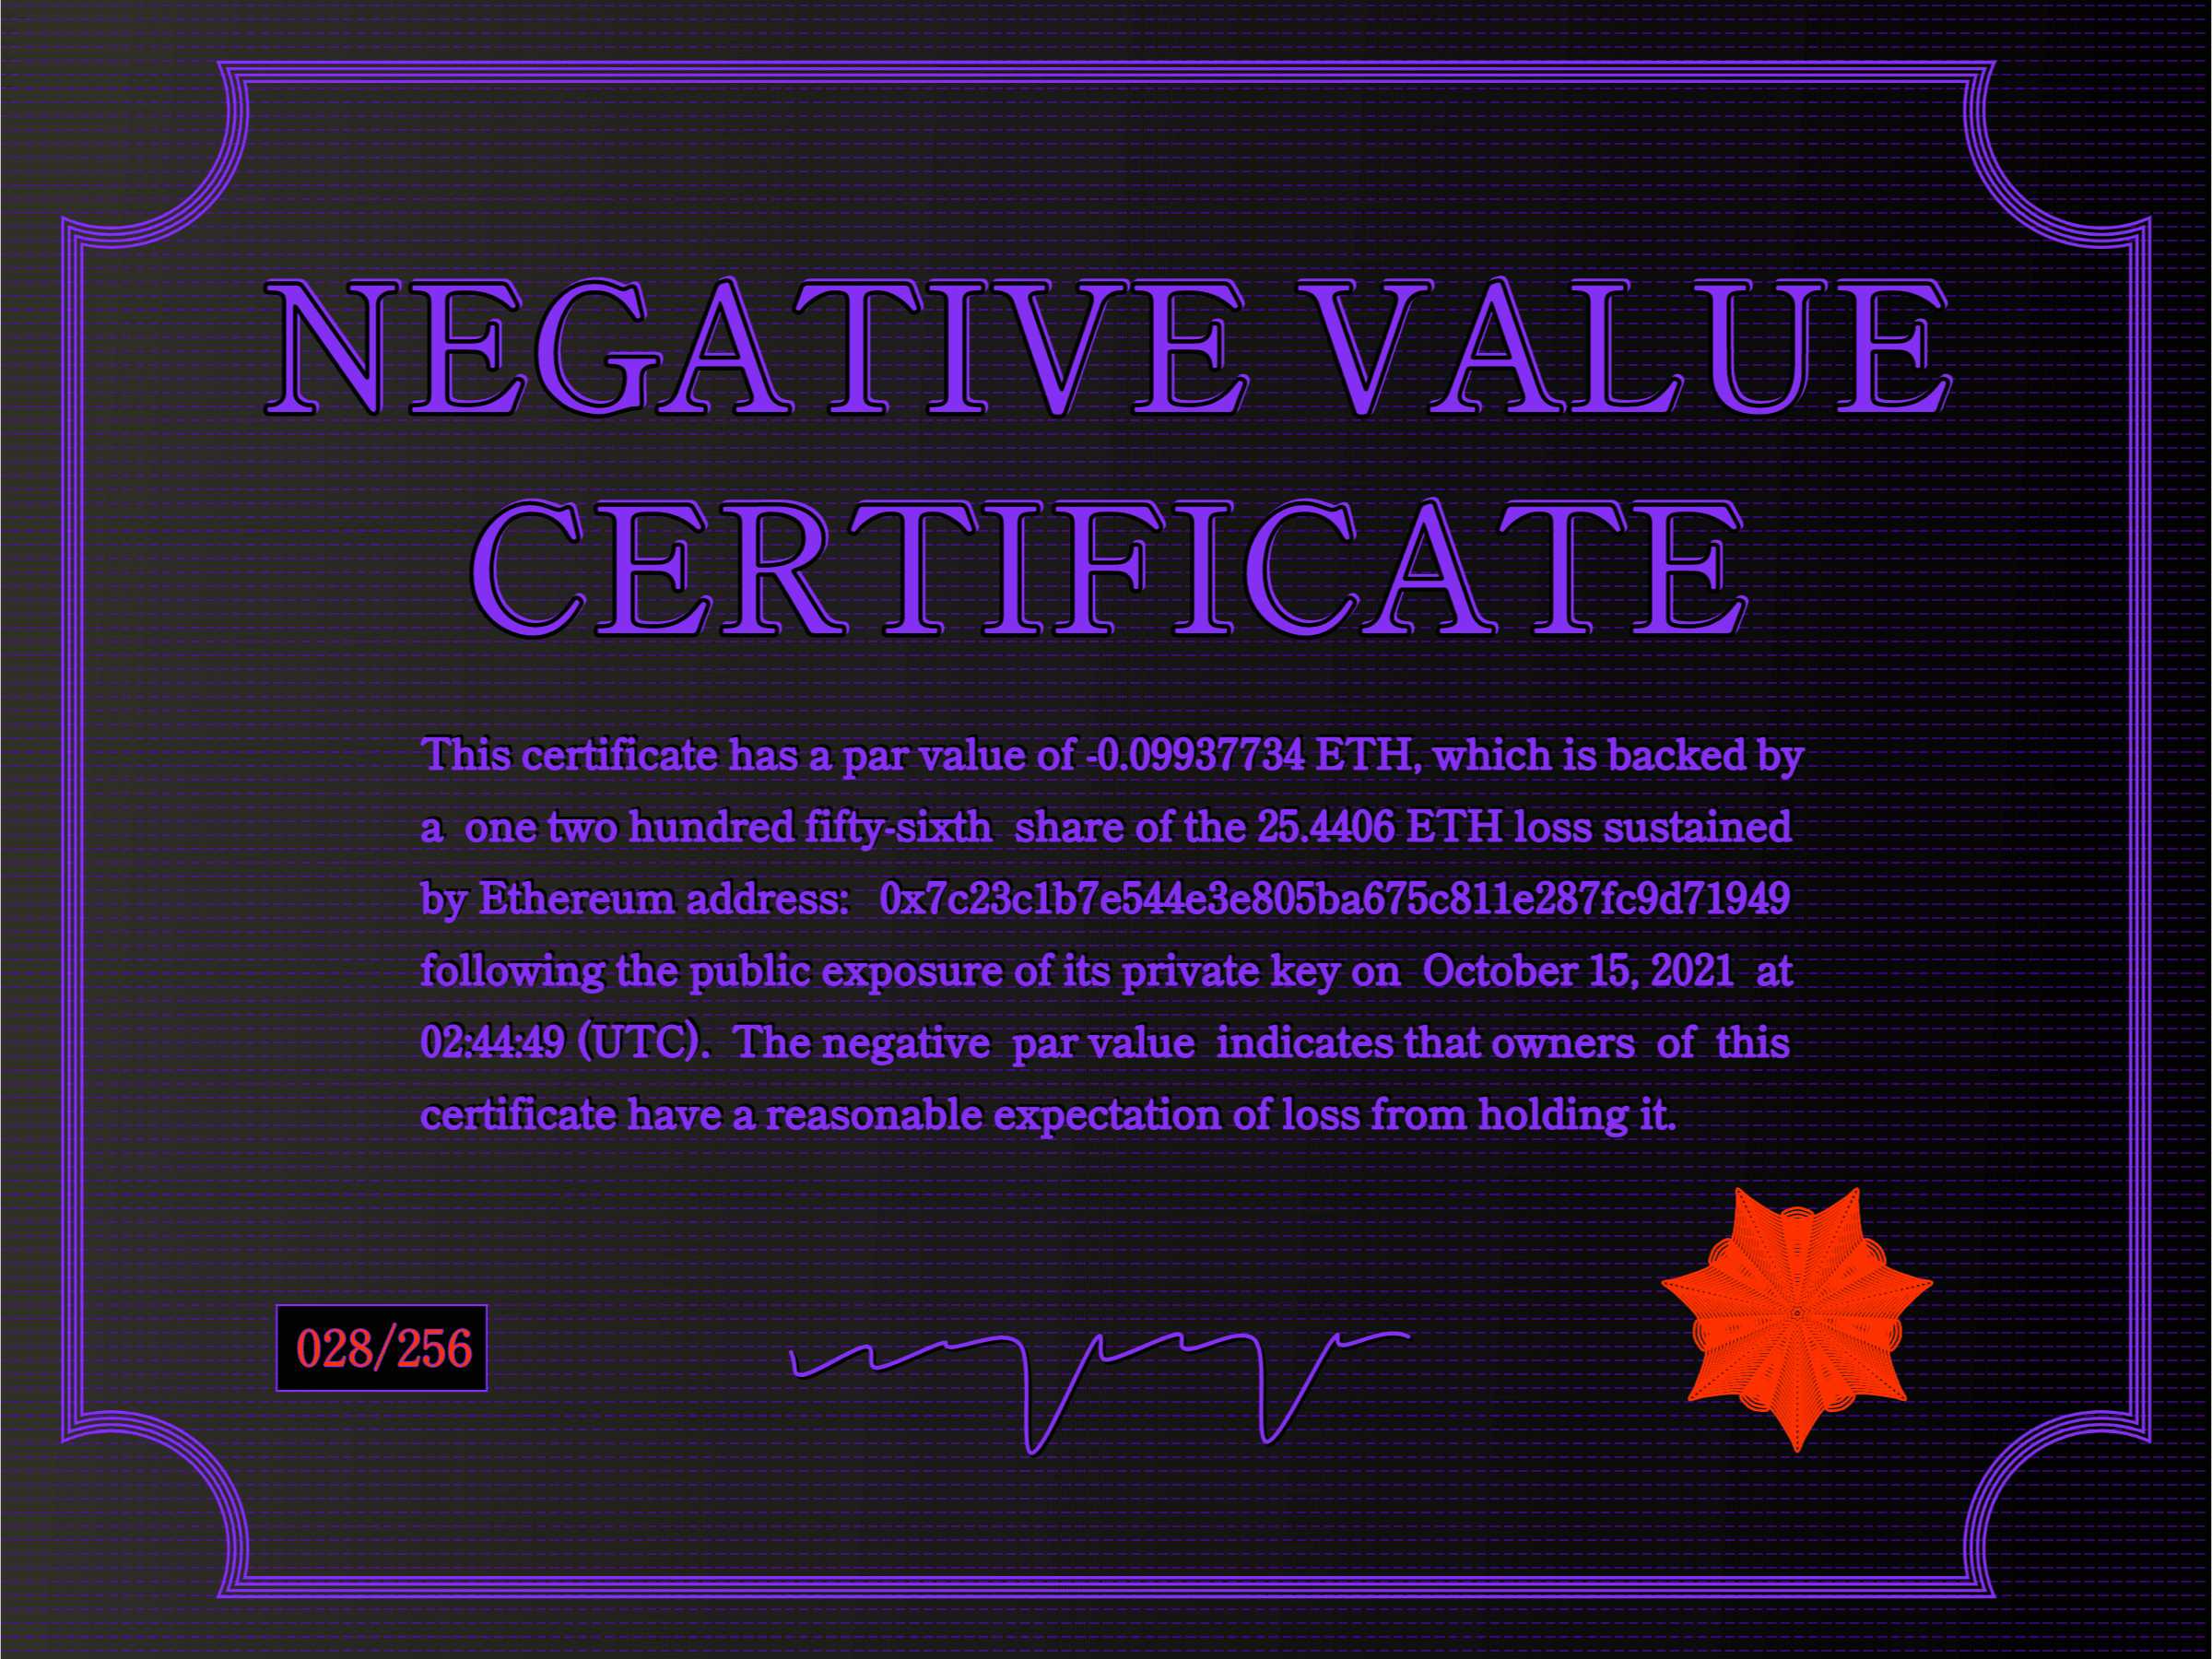 Negative Value Certificate #28 of 256